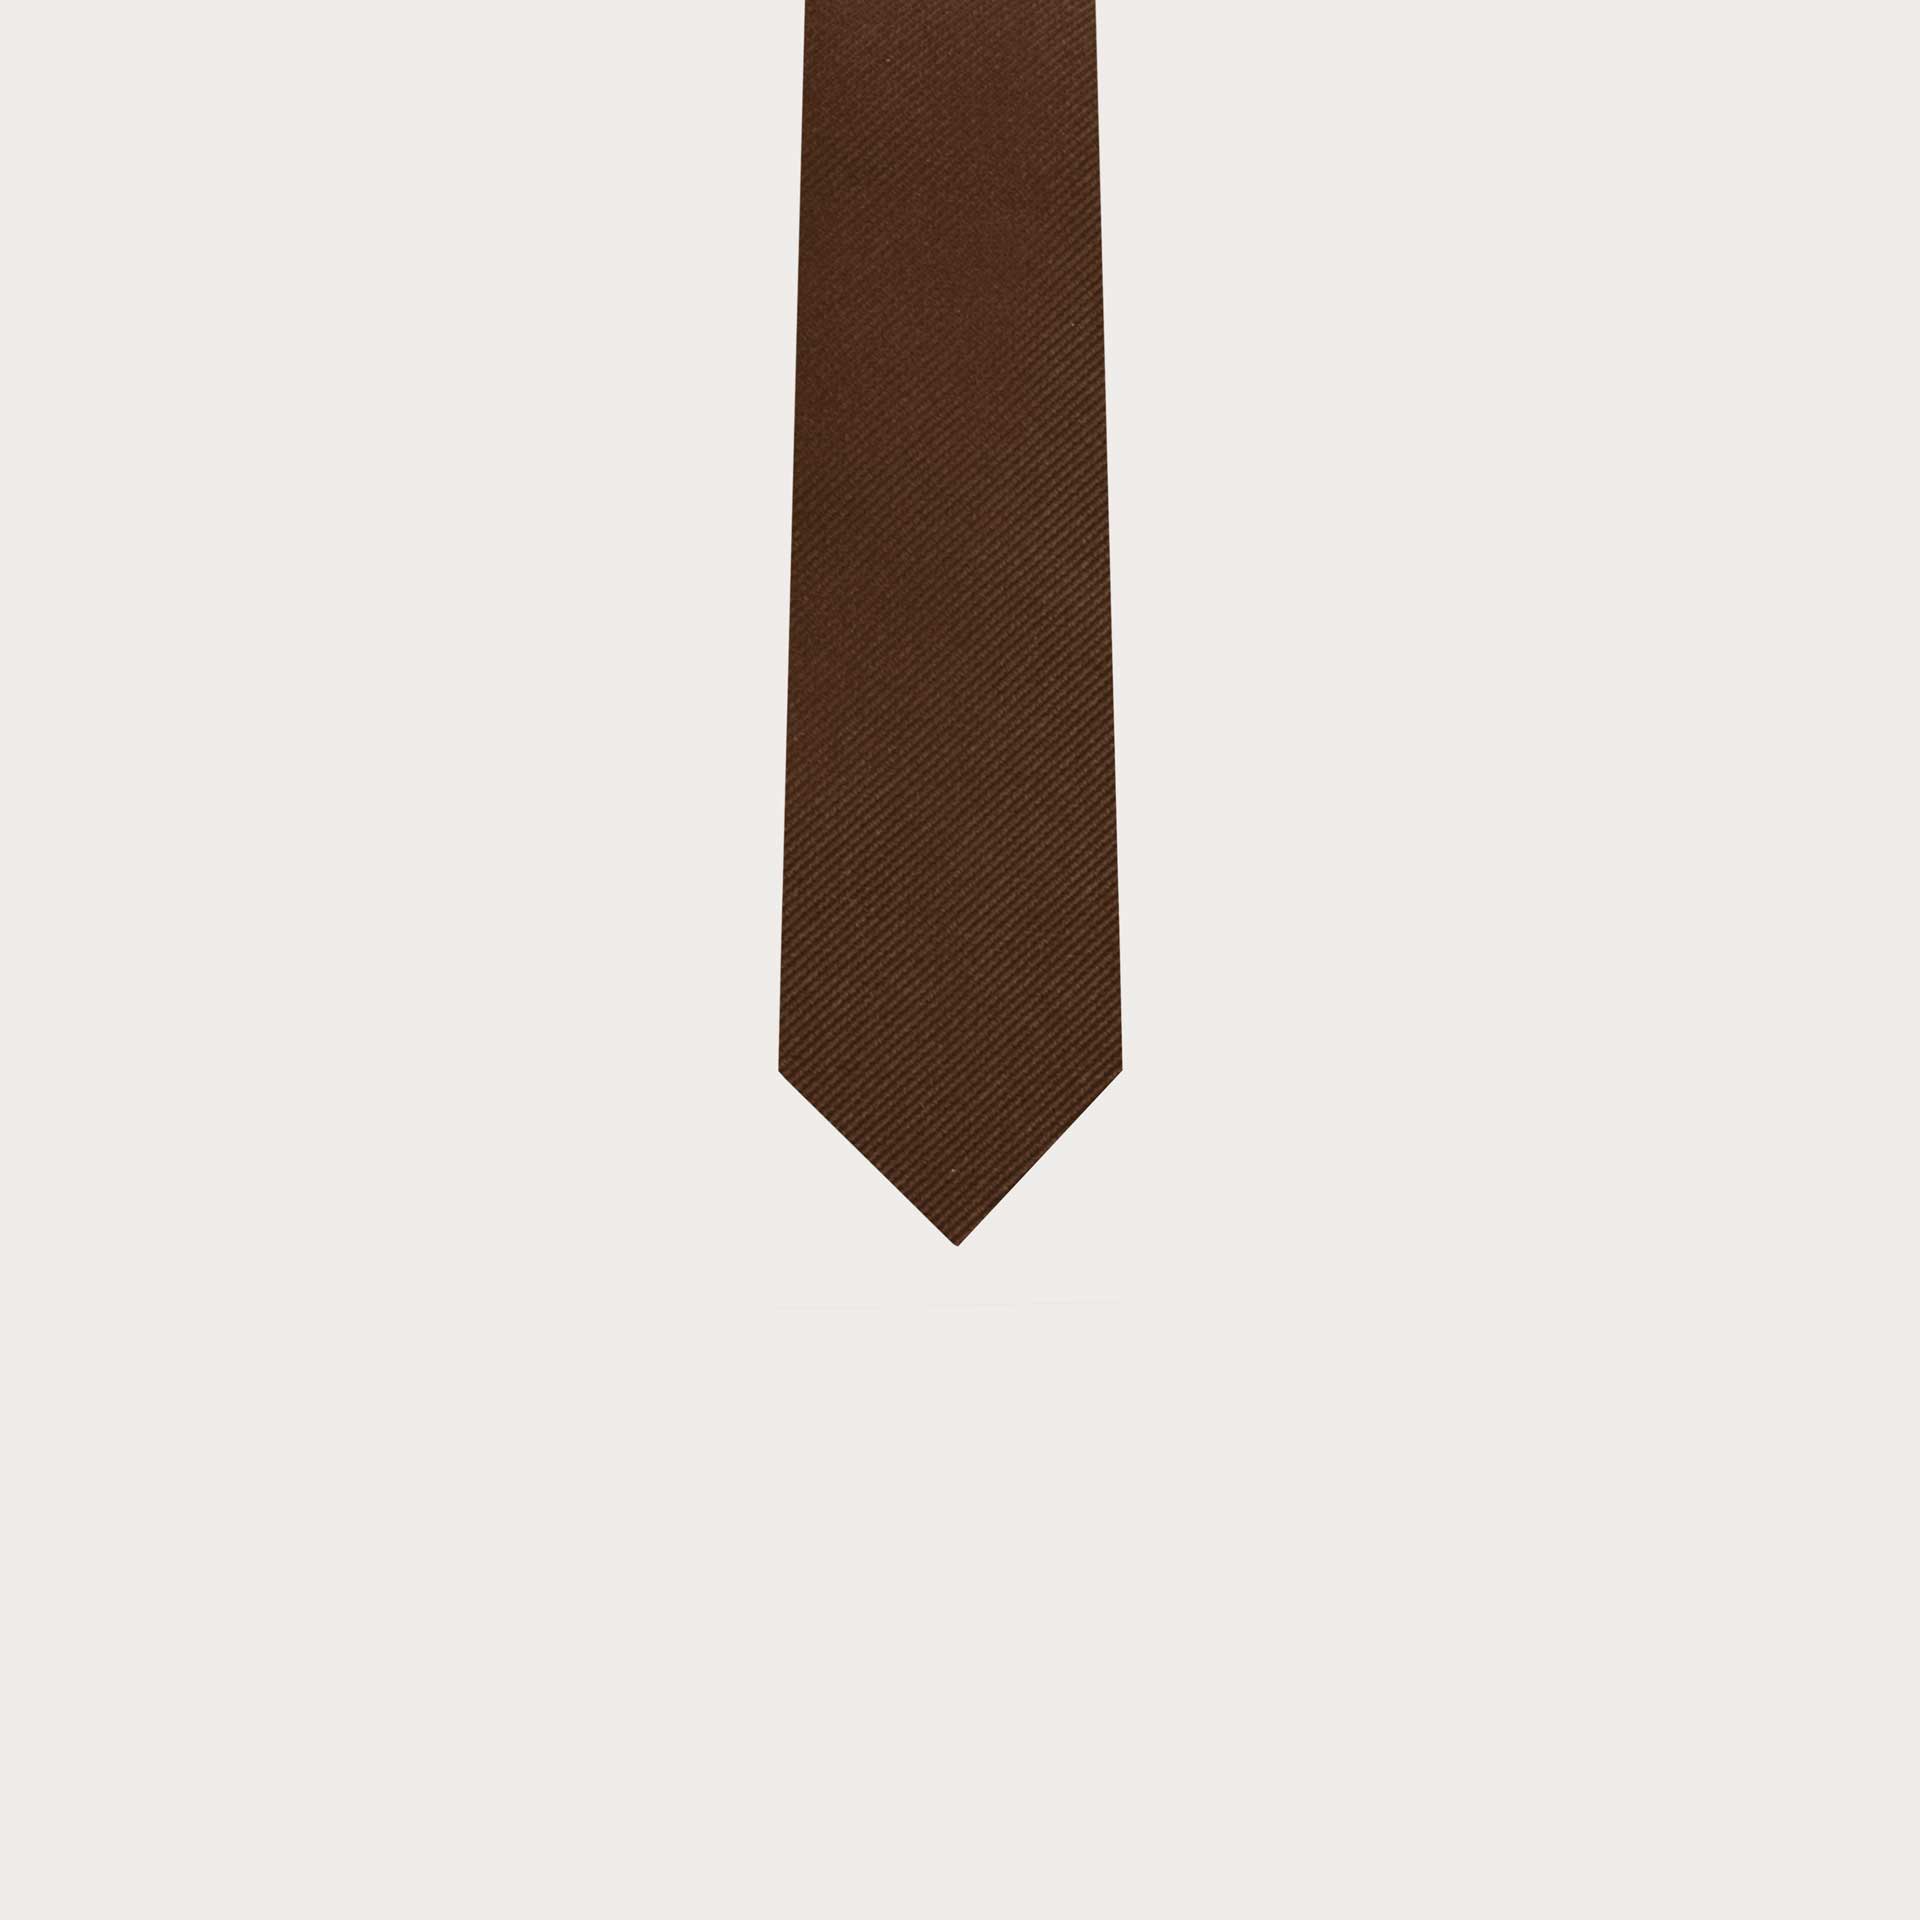 BRUCLE Brown necktie for kids